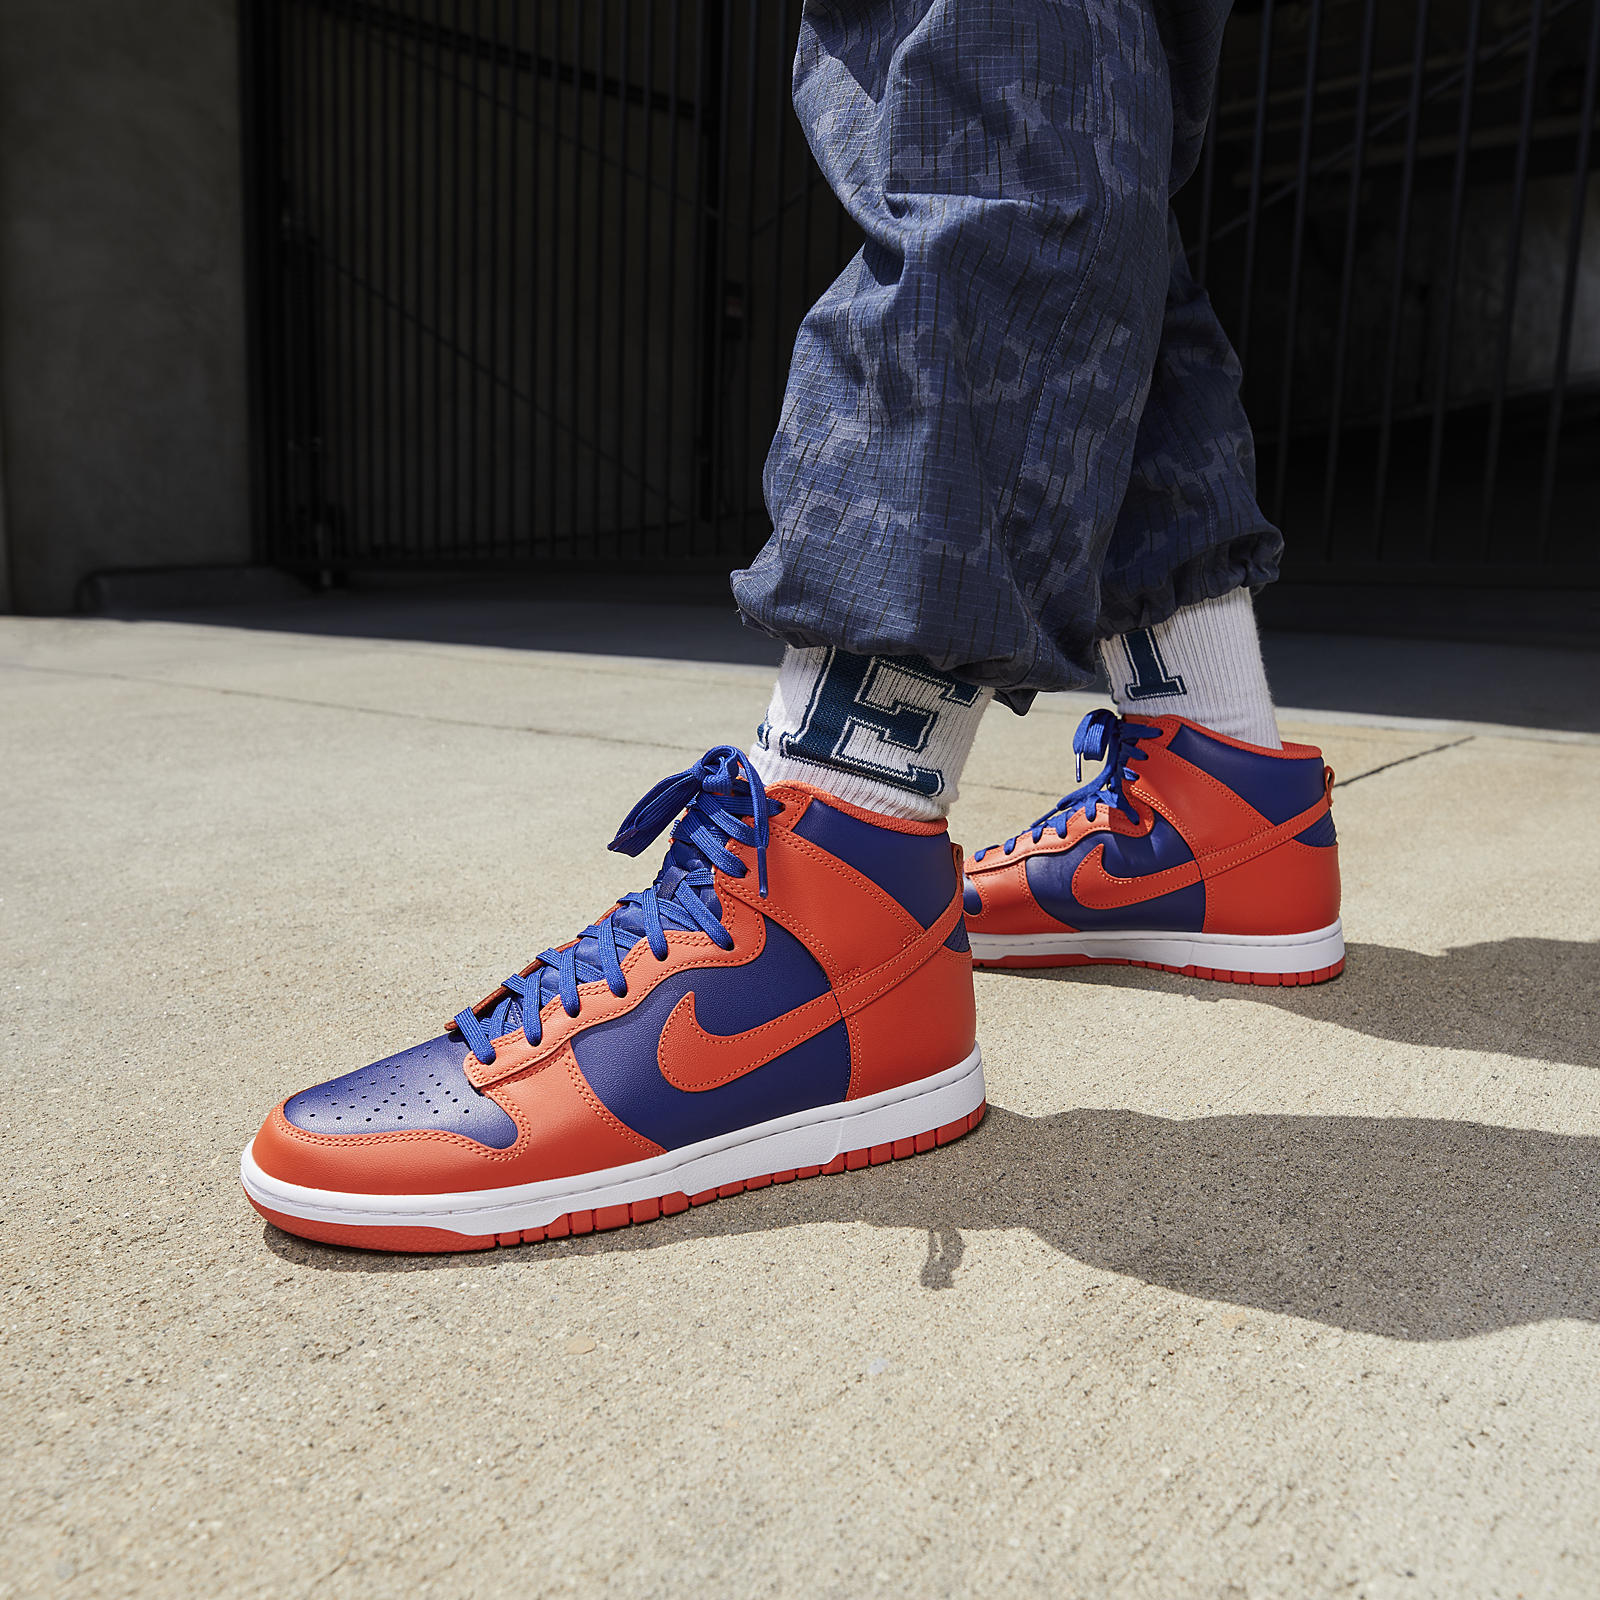 Nike Dunk High Retro
Orange / Blue